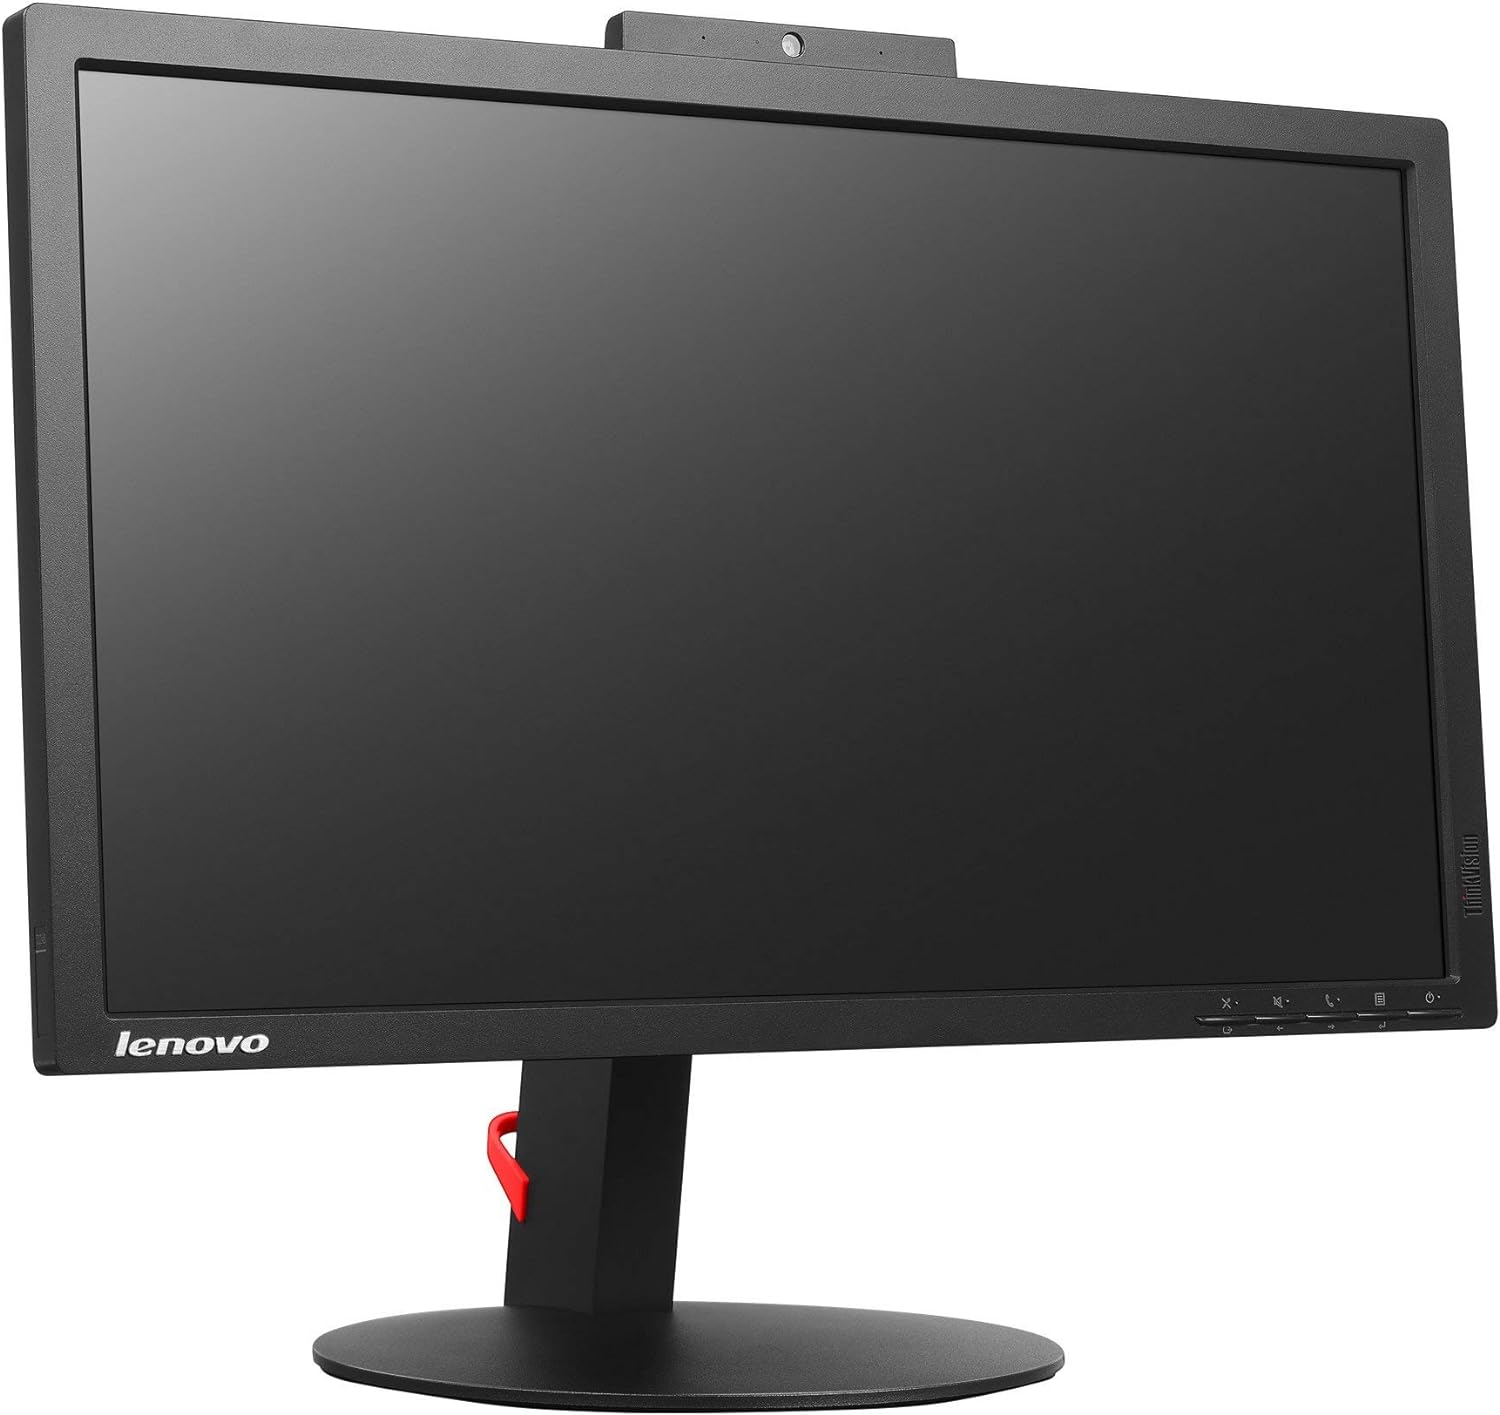 Refurbished Lenovo ThinkVision 22" LED LCD Monitor With Webcam